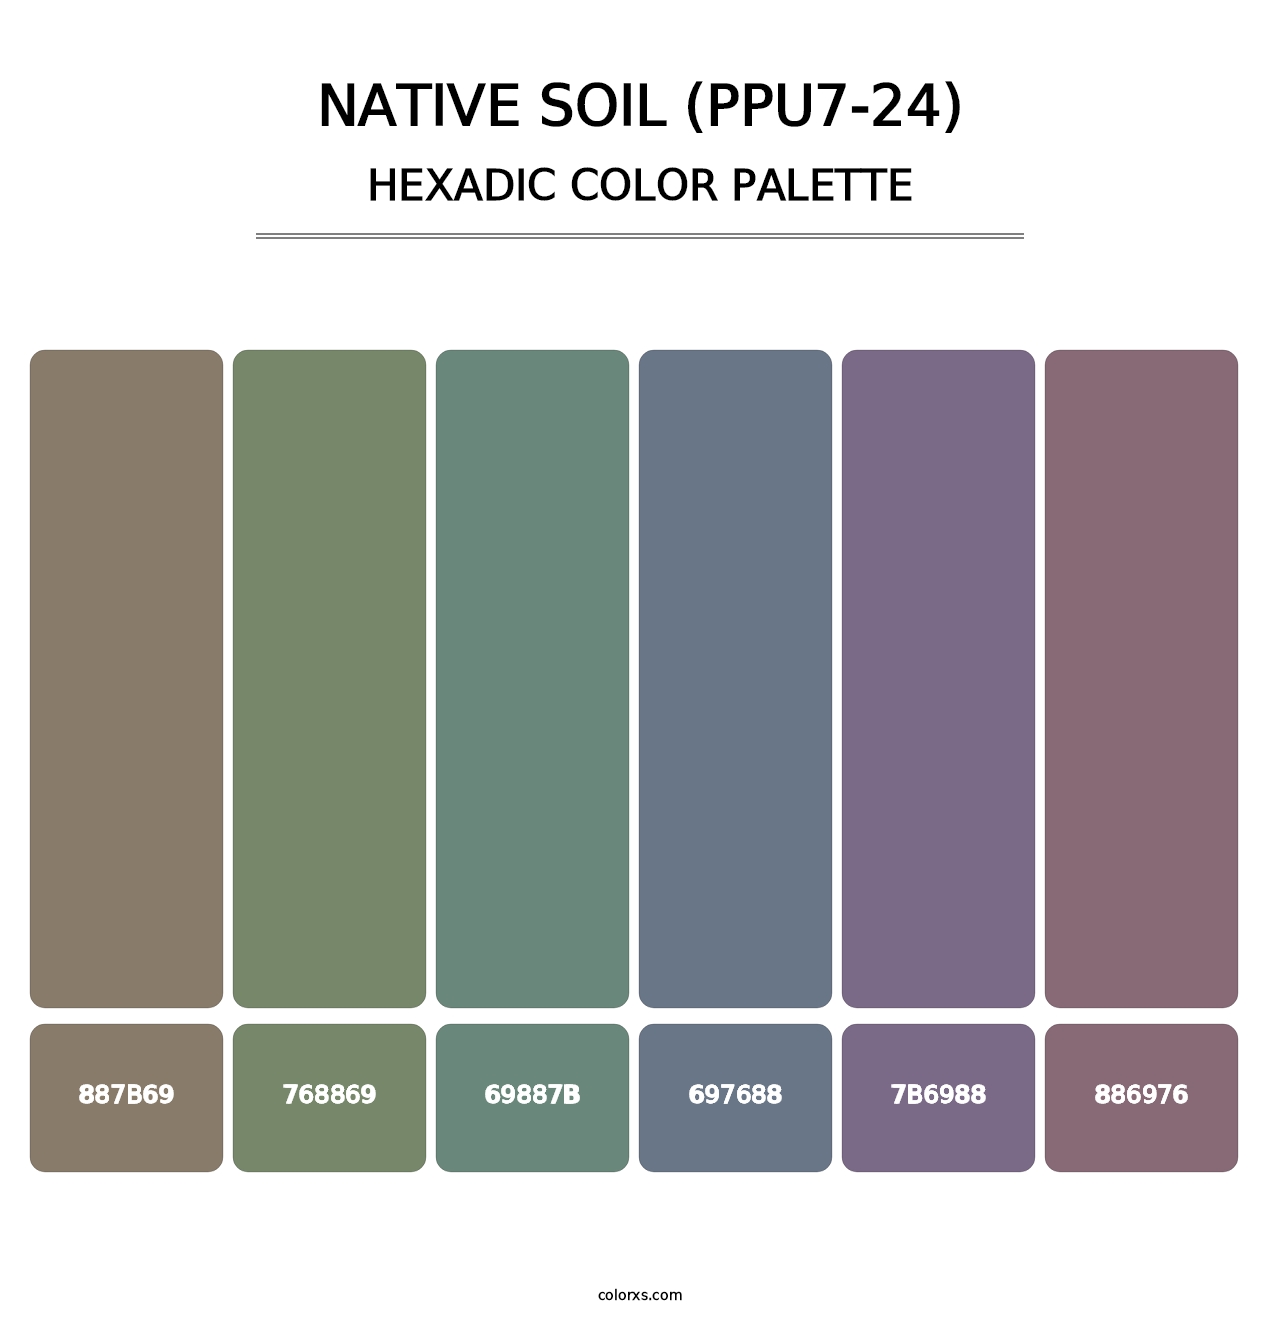 Native Soil (PPU7-24) - Hexadic Color Palette